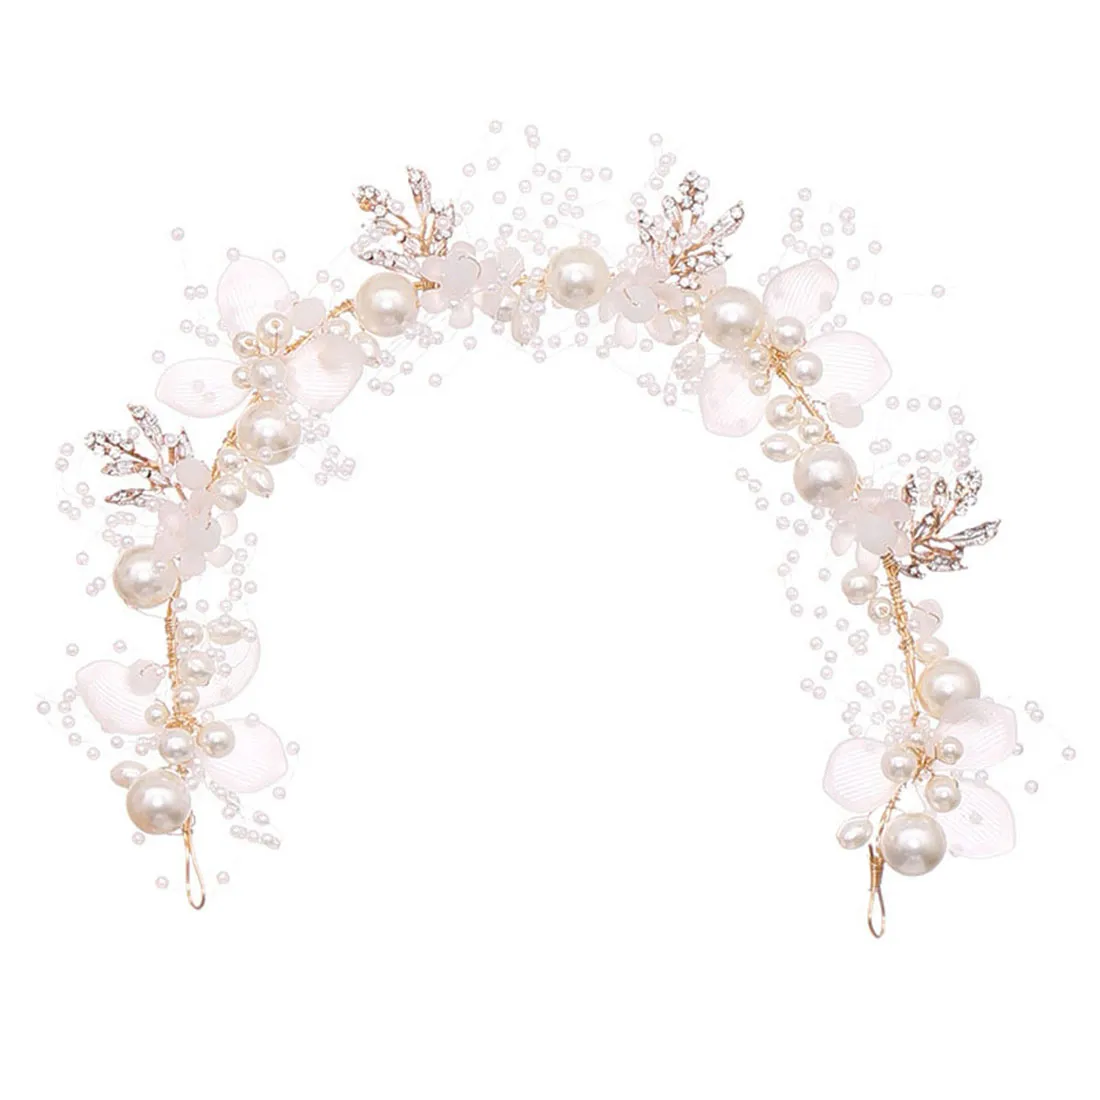 Diademas de perlas para mujer y niña, diademas de boda, Tiaras de flores blancas y coronas, tocado de moda coreana, joyería para el cabello